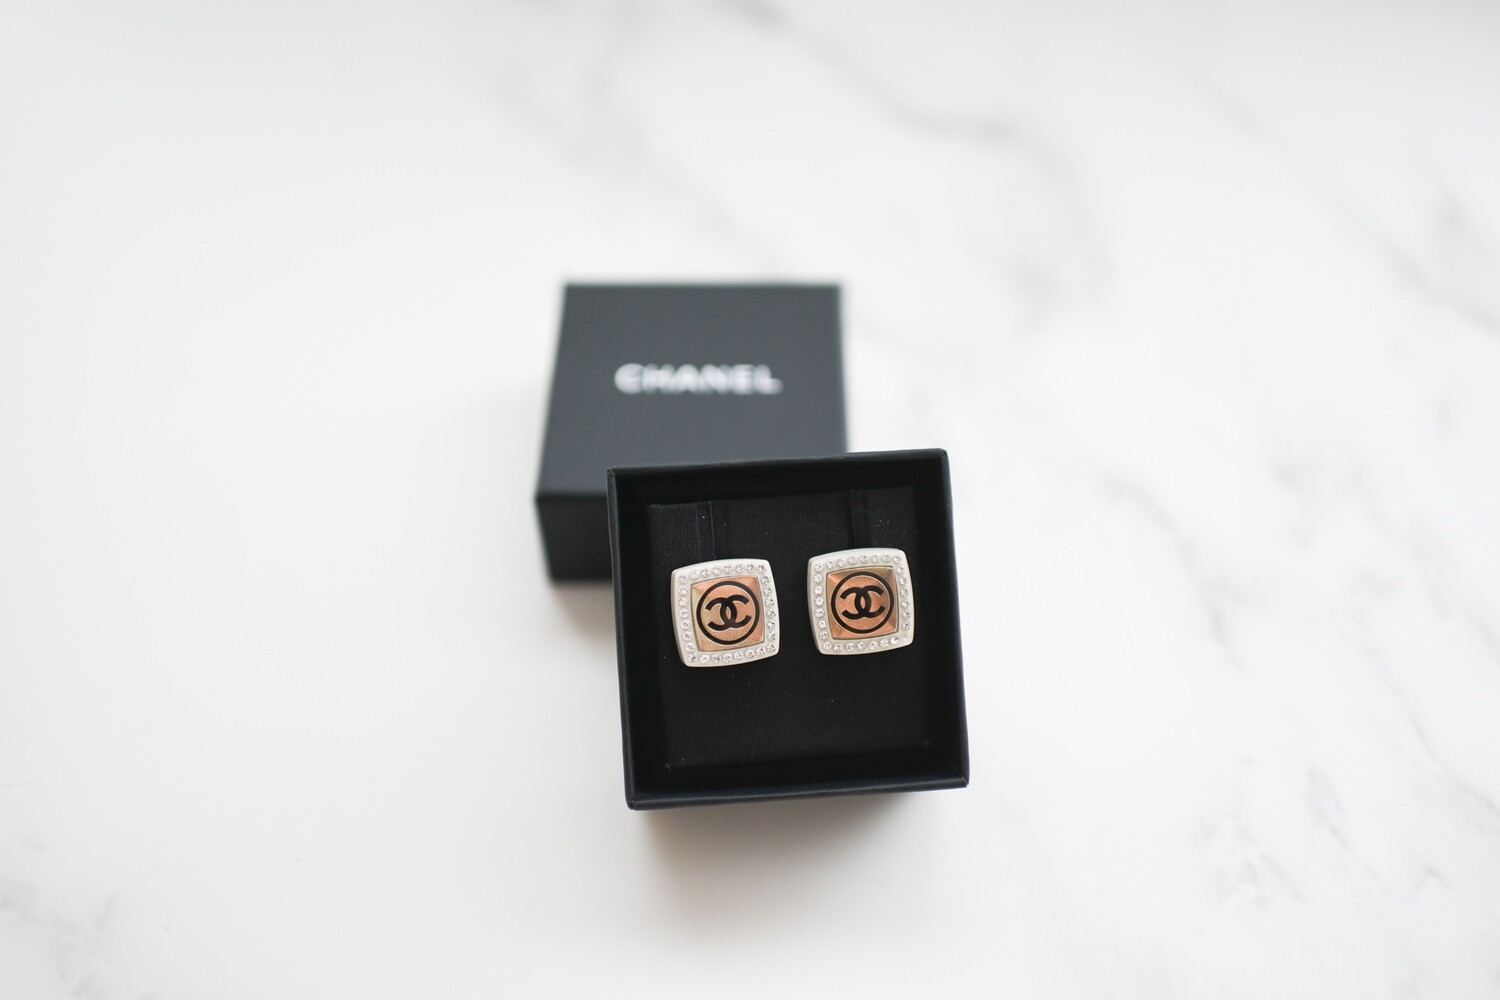 Chanel Earrings Acrylic Studs, Gold with Rhinestones Hardware, New in Box  GA001